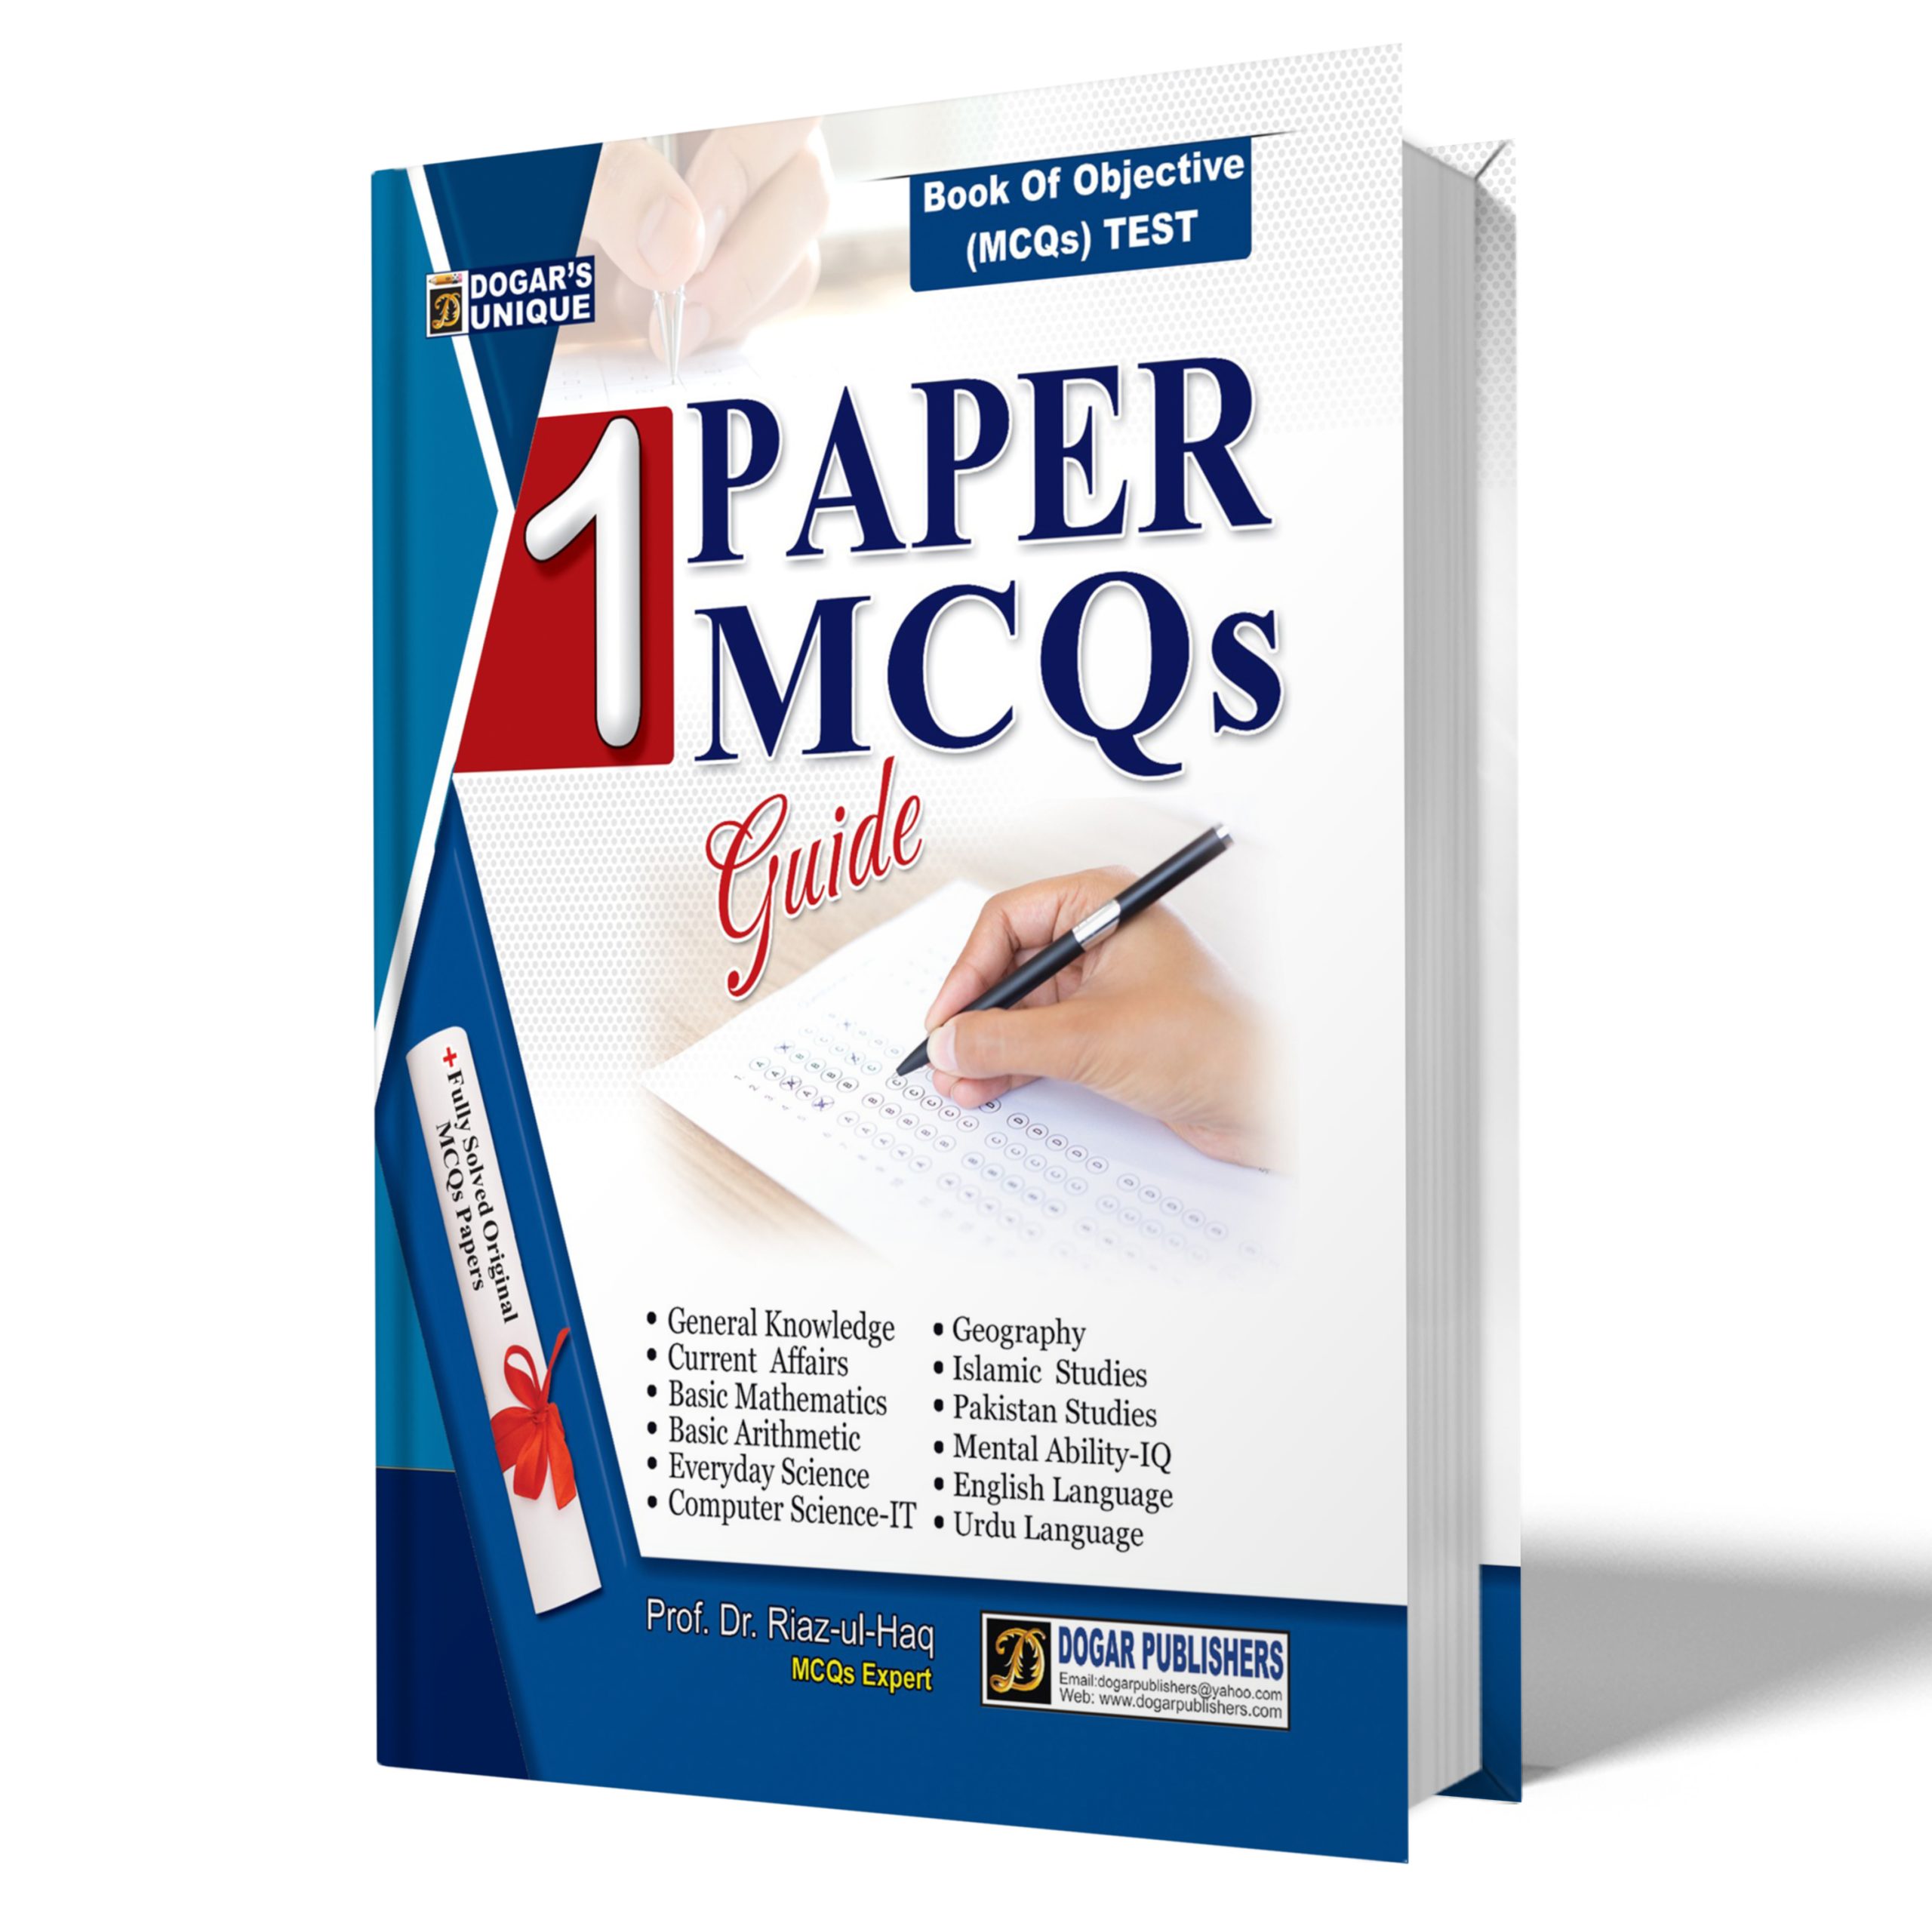 1 Paper MCQs